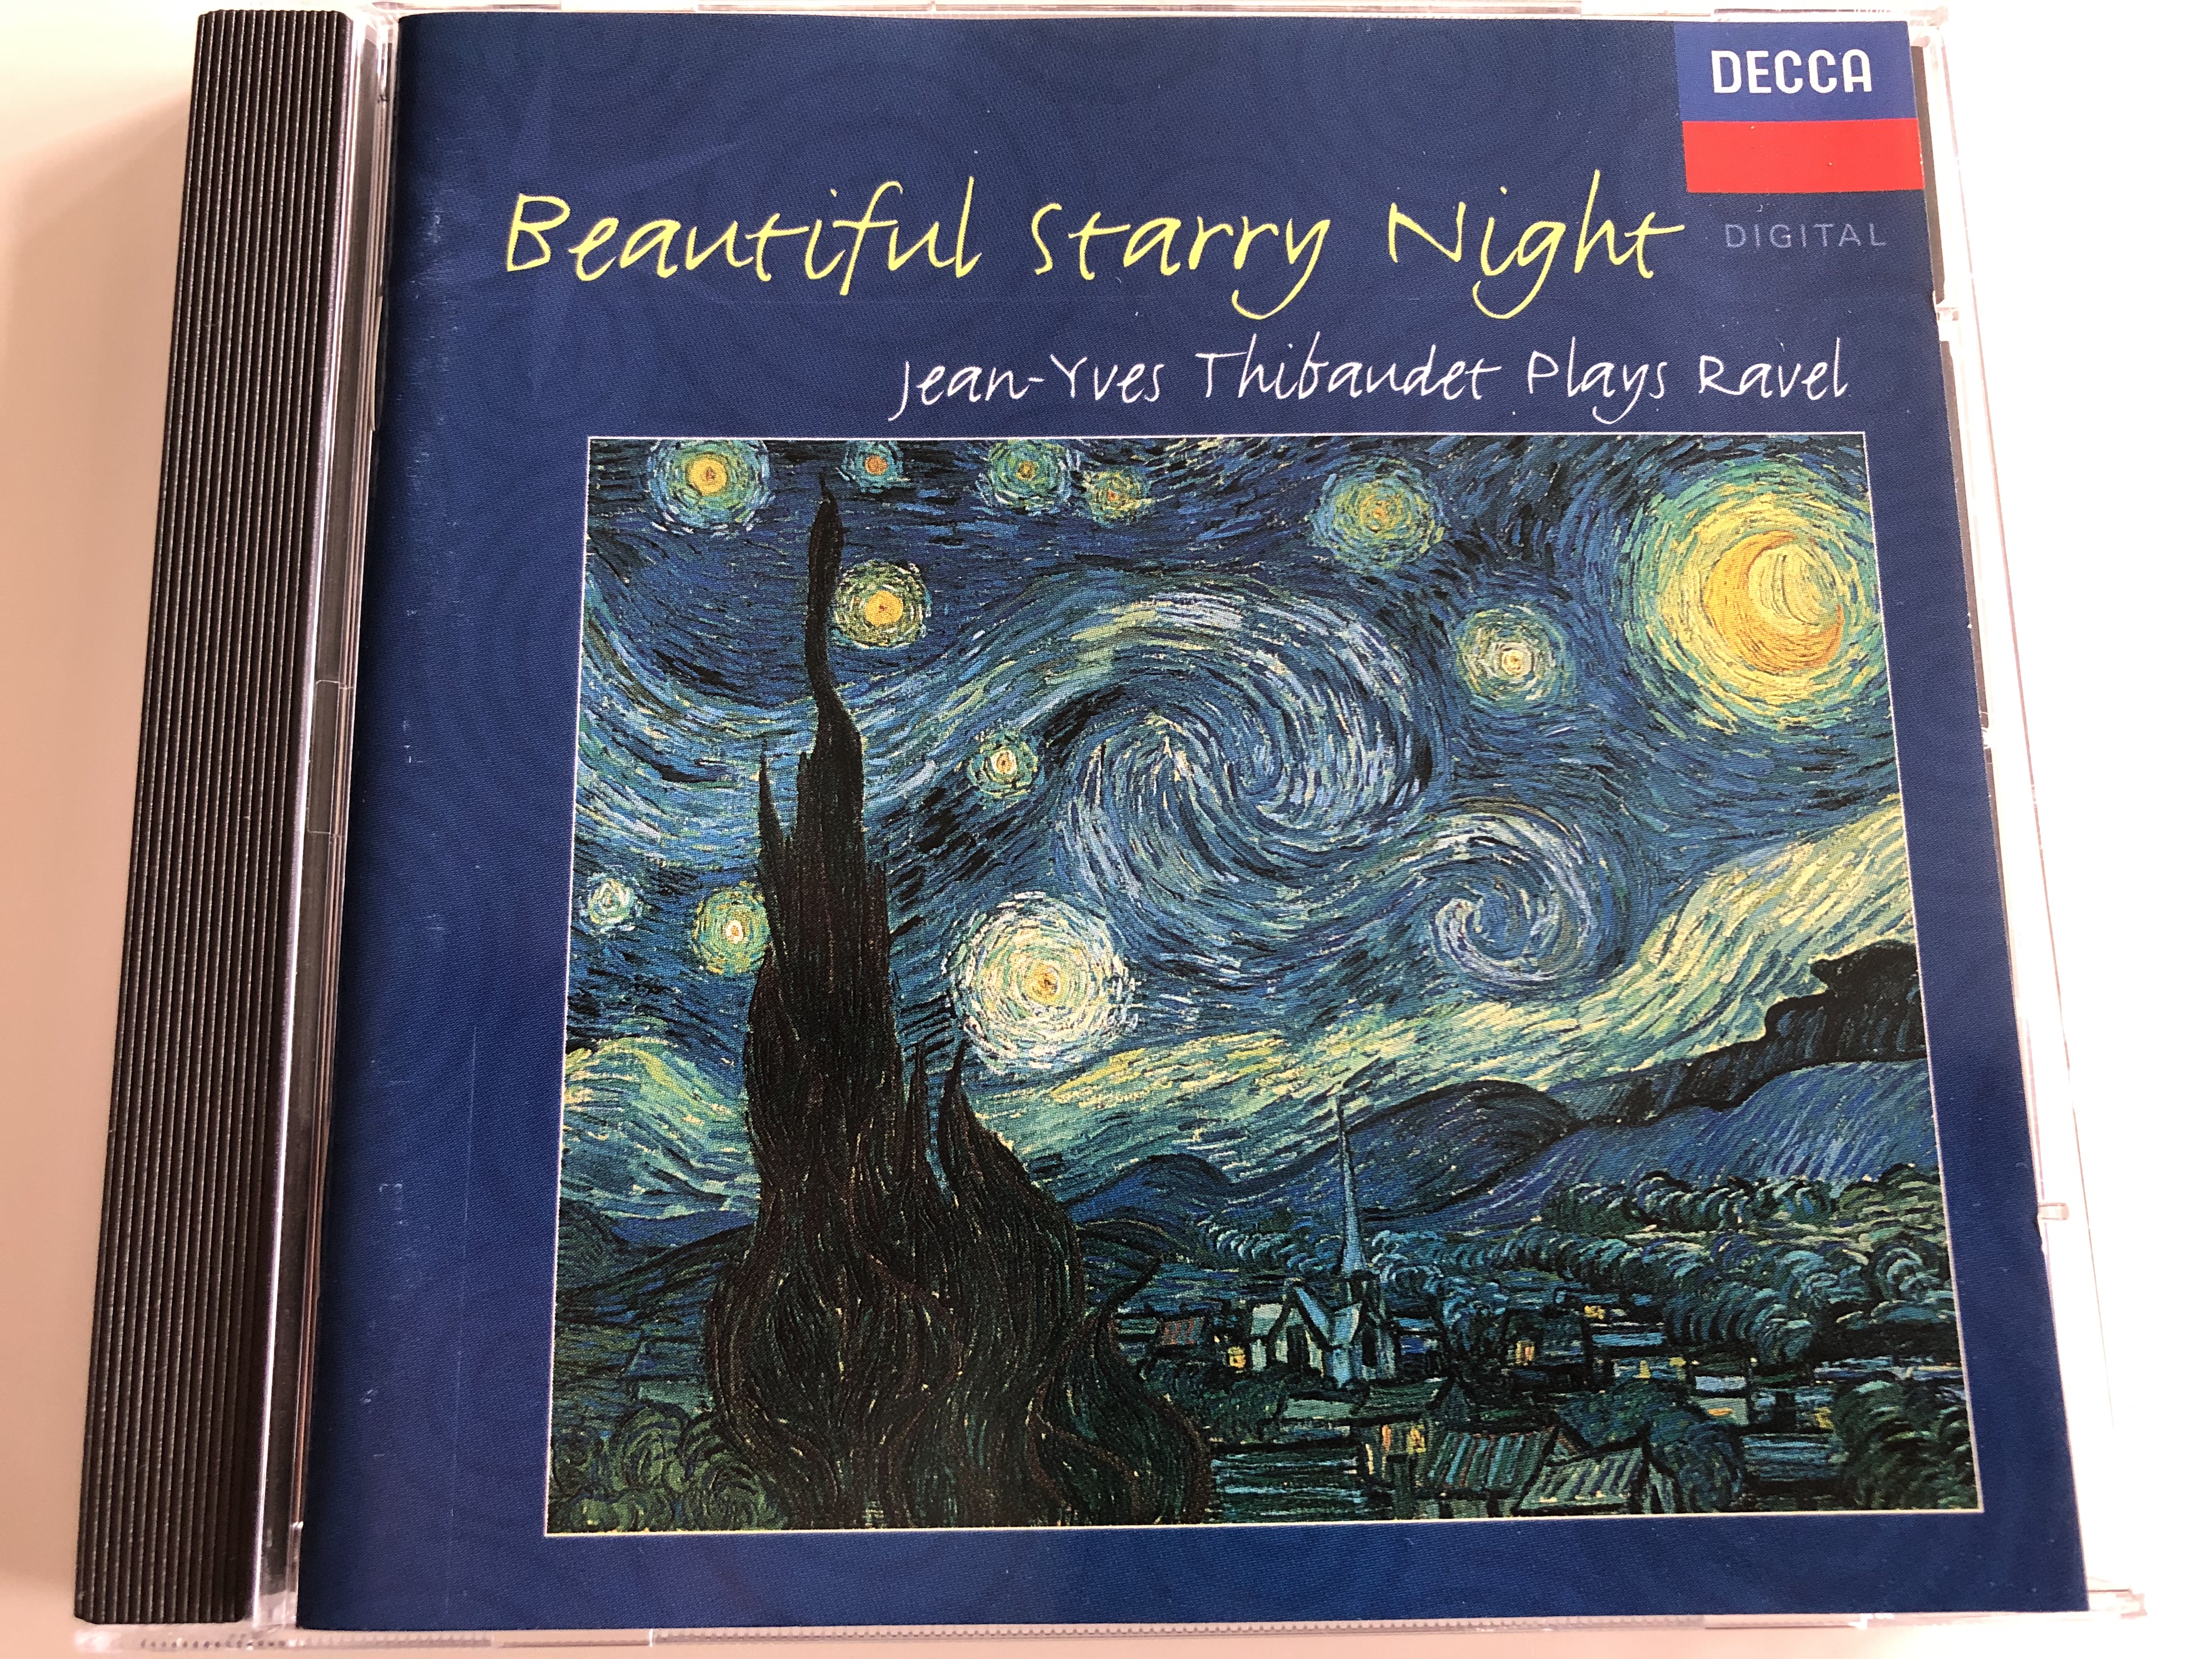 beautiful-starry-night-jean-yves-thibaudet-plays-ravel-decca-audio-cd-1992-448-618-2-1-.jpg